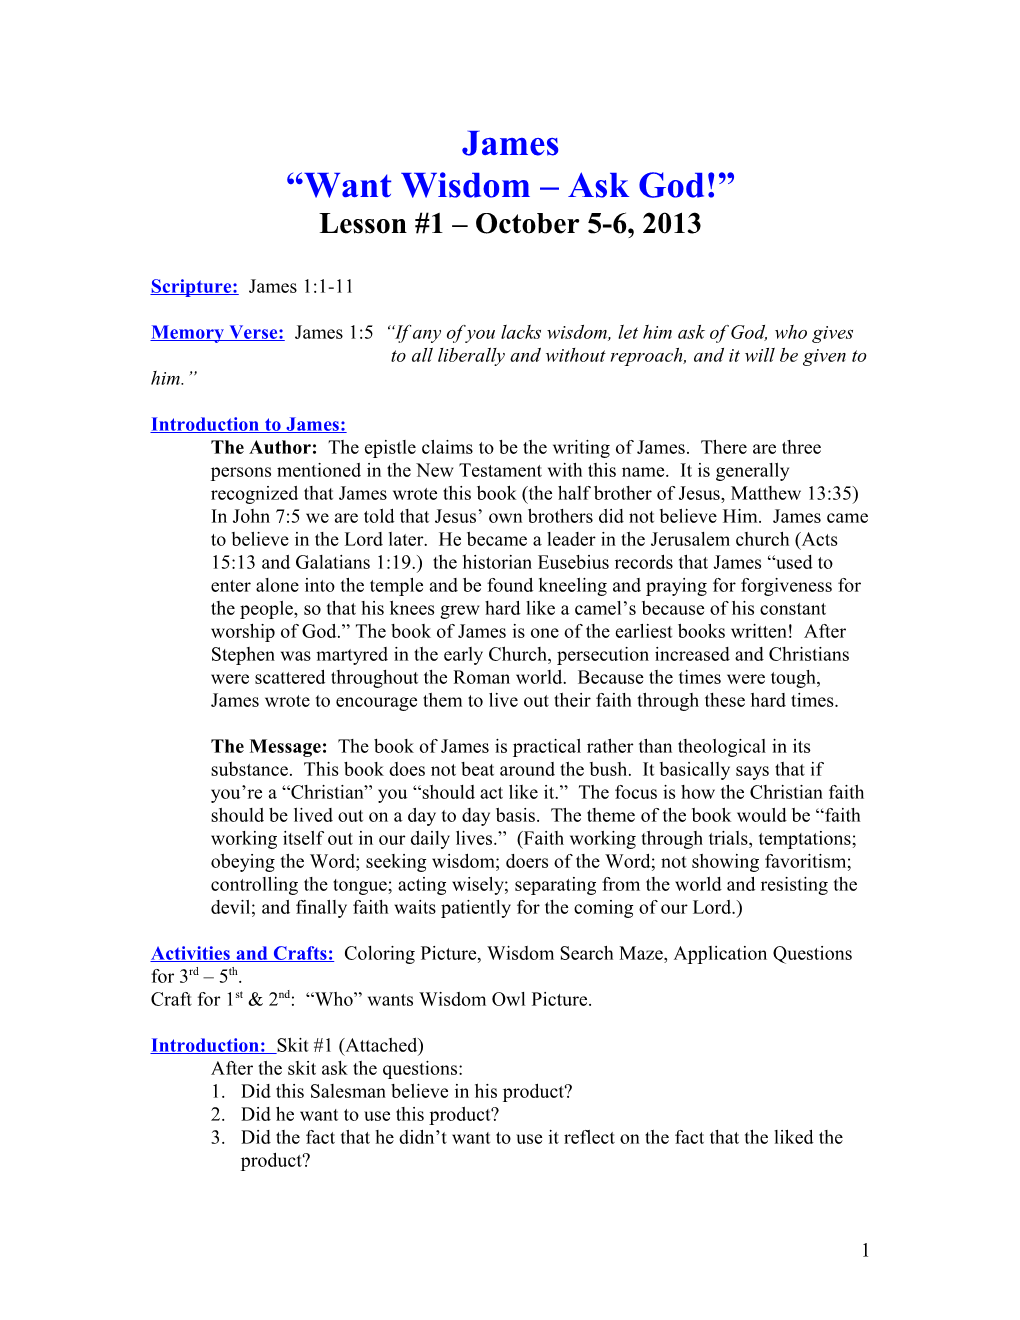 Want Wisdom Ask God!